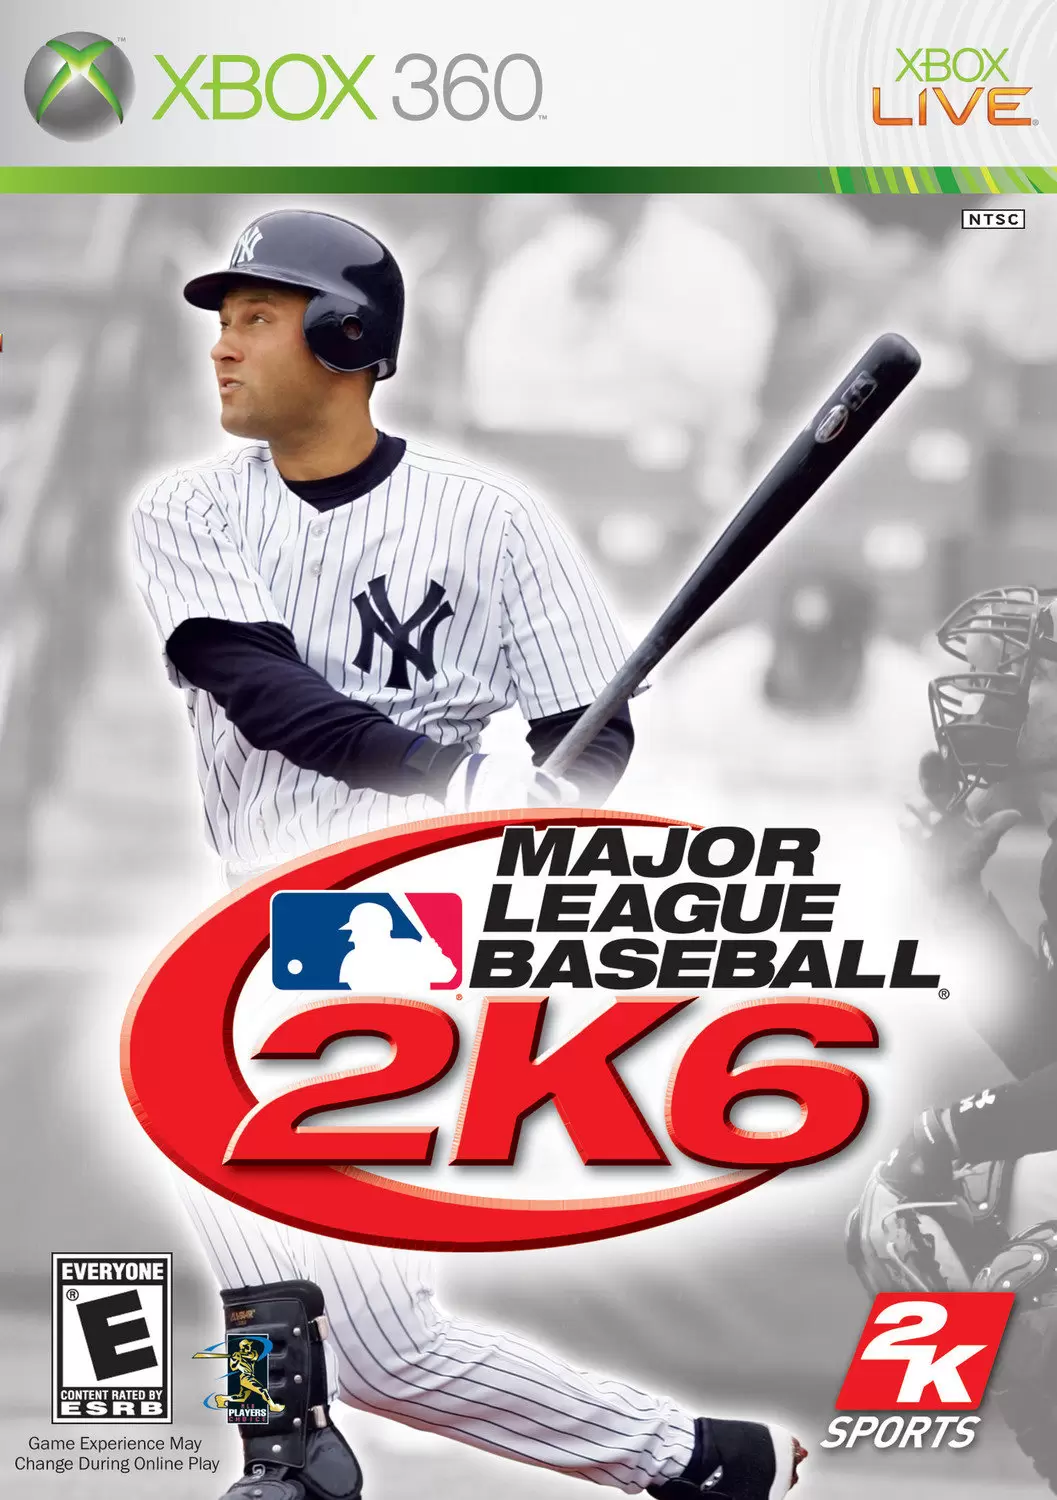 XBOX 360 Games - Major League Baseball 2K6